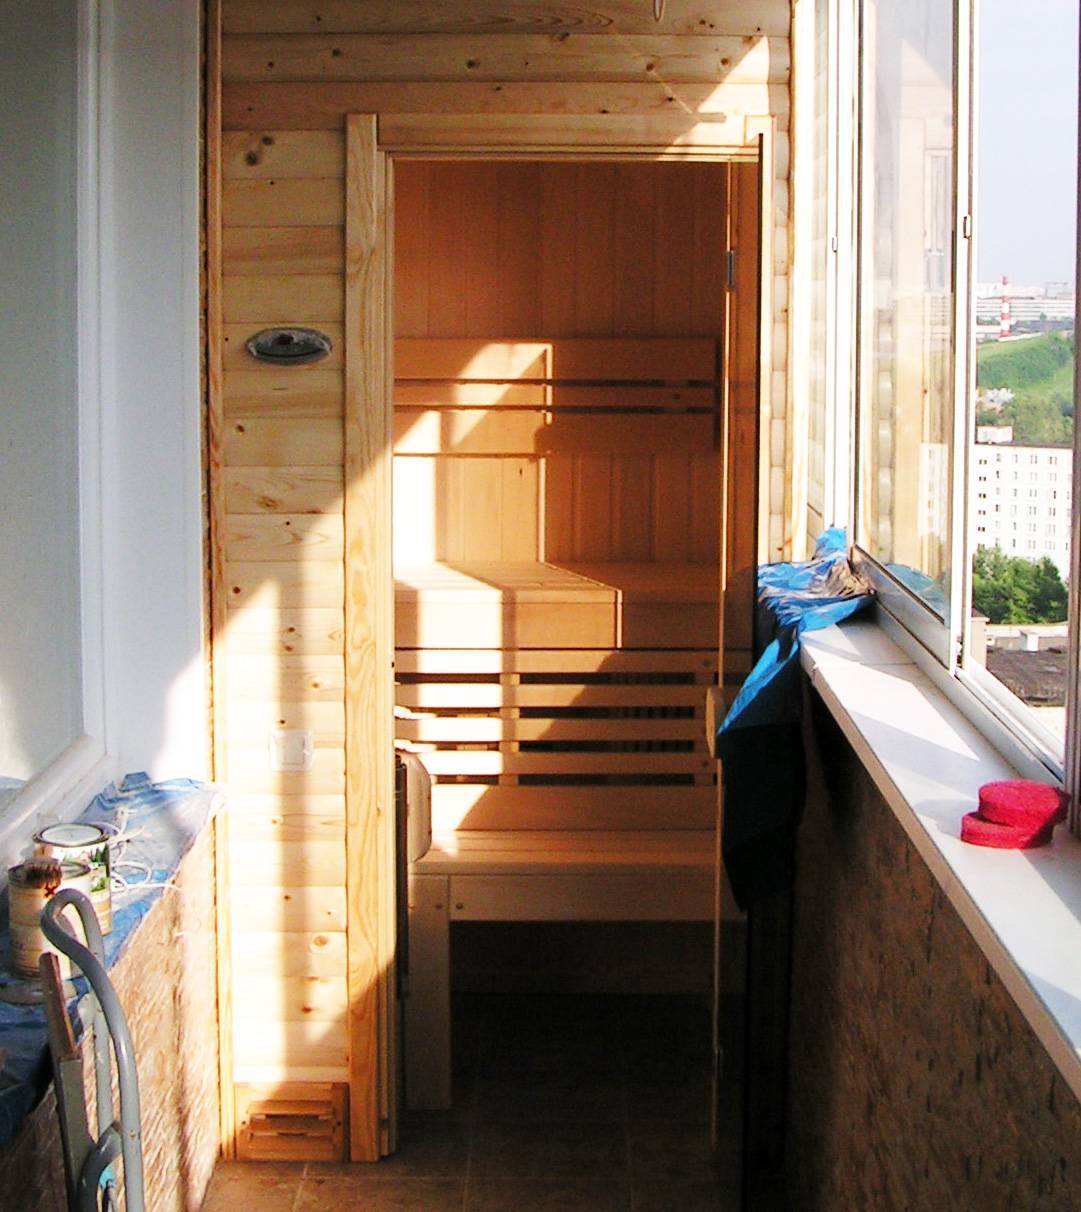 Сауна в квартире в ванной комнате или на балконе своими руками: шаг за шагом, фото + видео